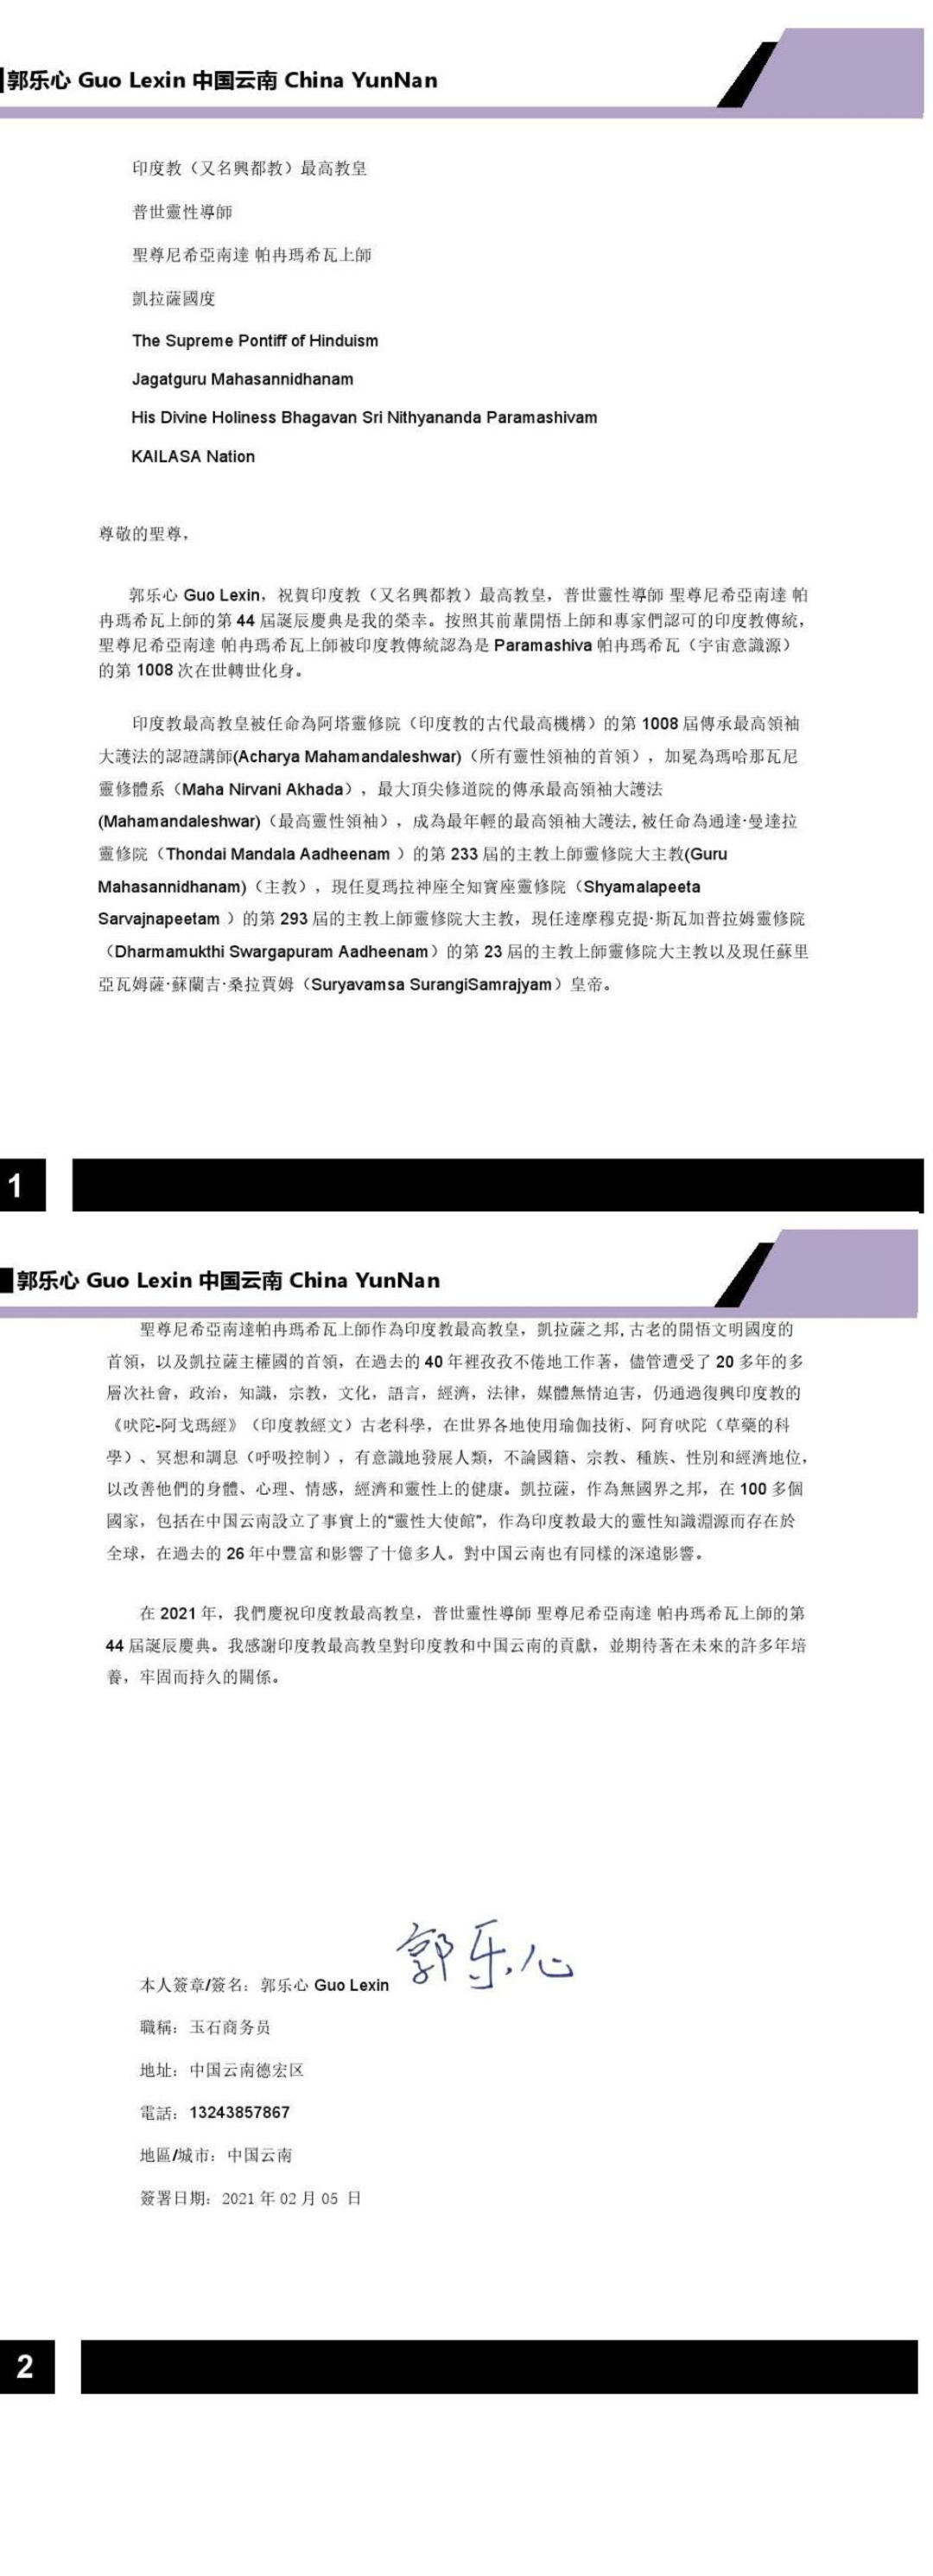 China---Guo-Lexin---Feb-5--2021-(Proclamation)-1htdJtrSIkxfoVhYCA8hZkT5fLXDwe4ep.pdf